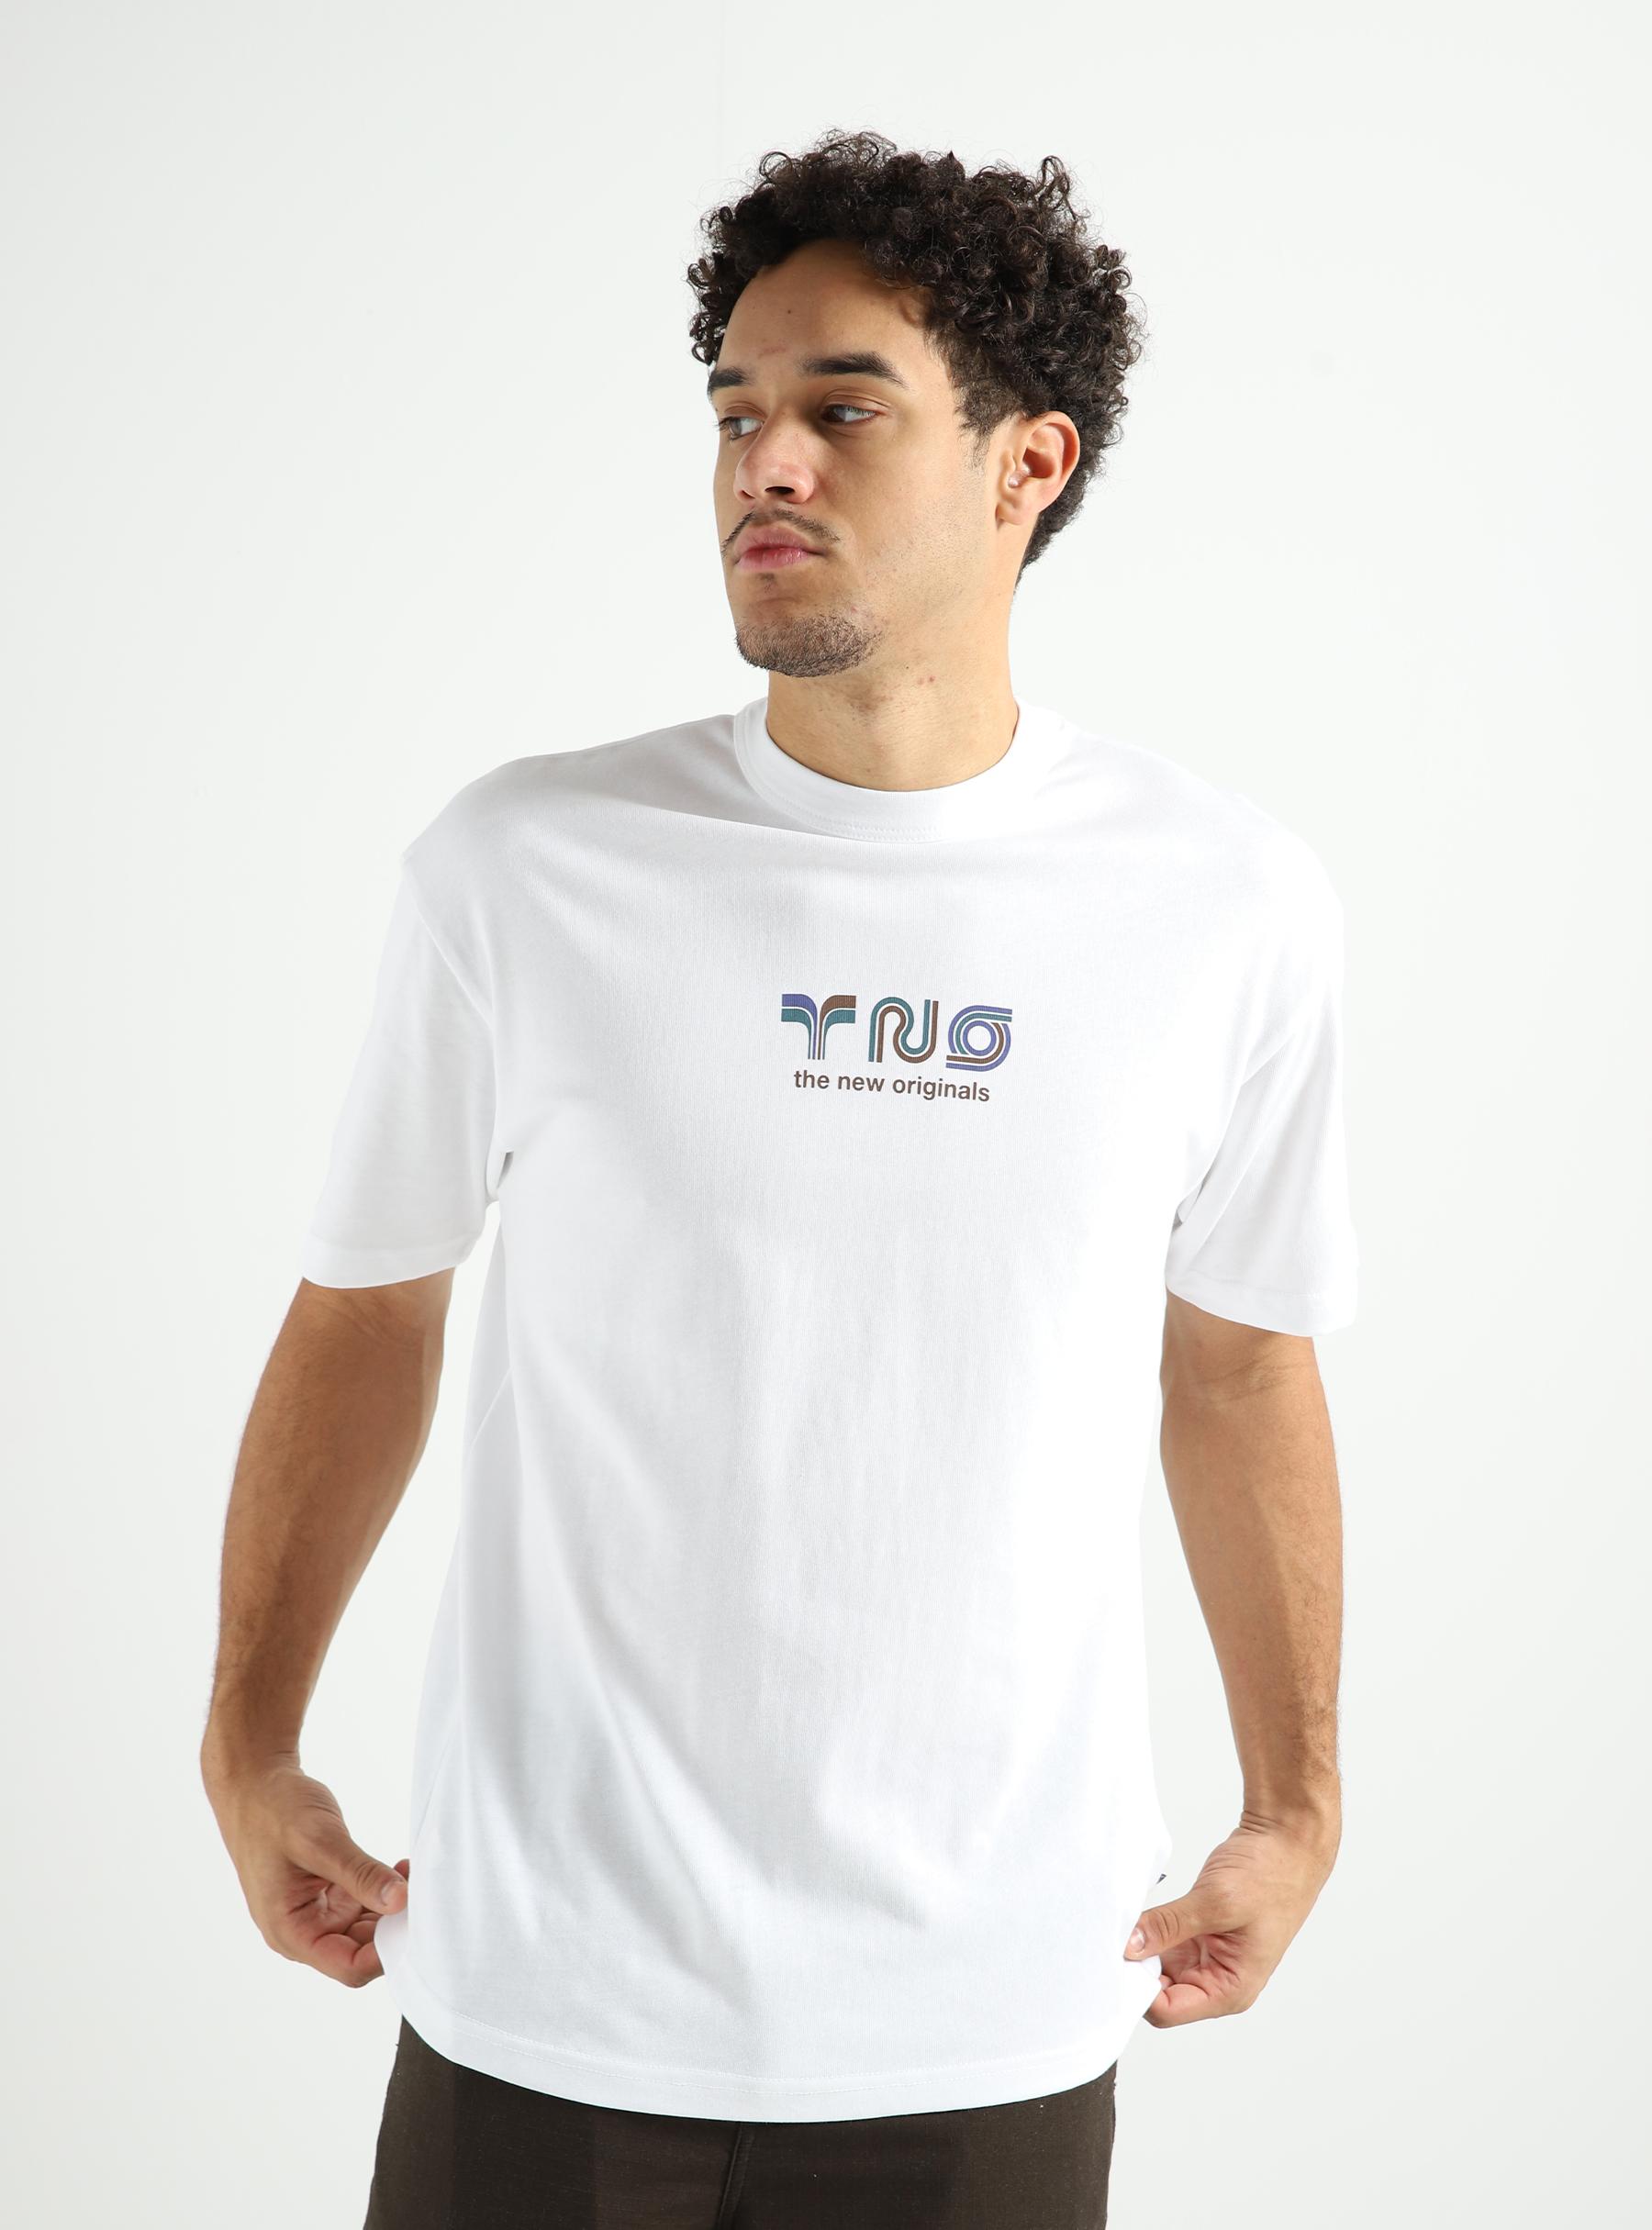 Supergraphic T-shirt White 100SGHD723.000